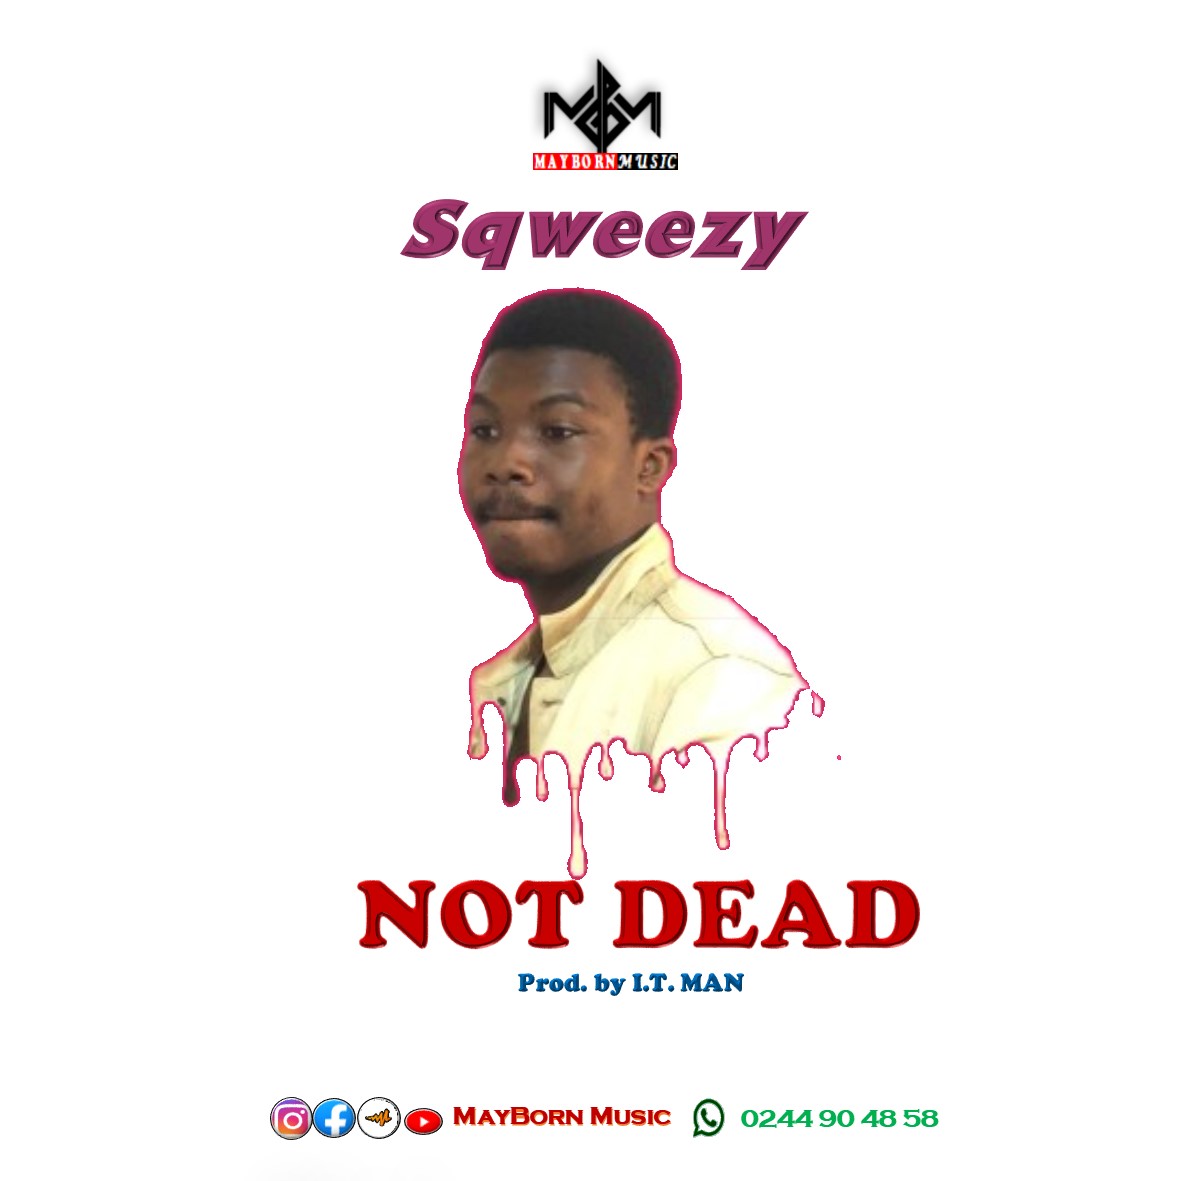 SQWEEZY - NOT DEAD